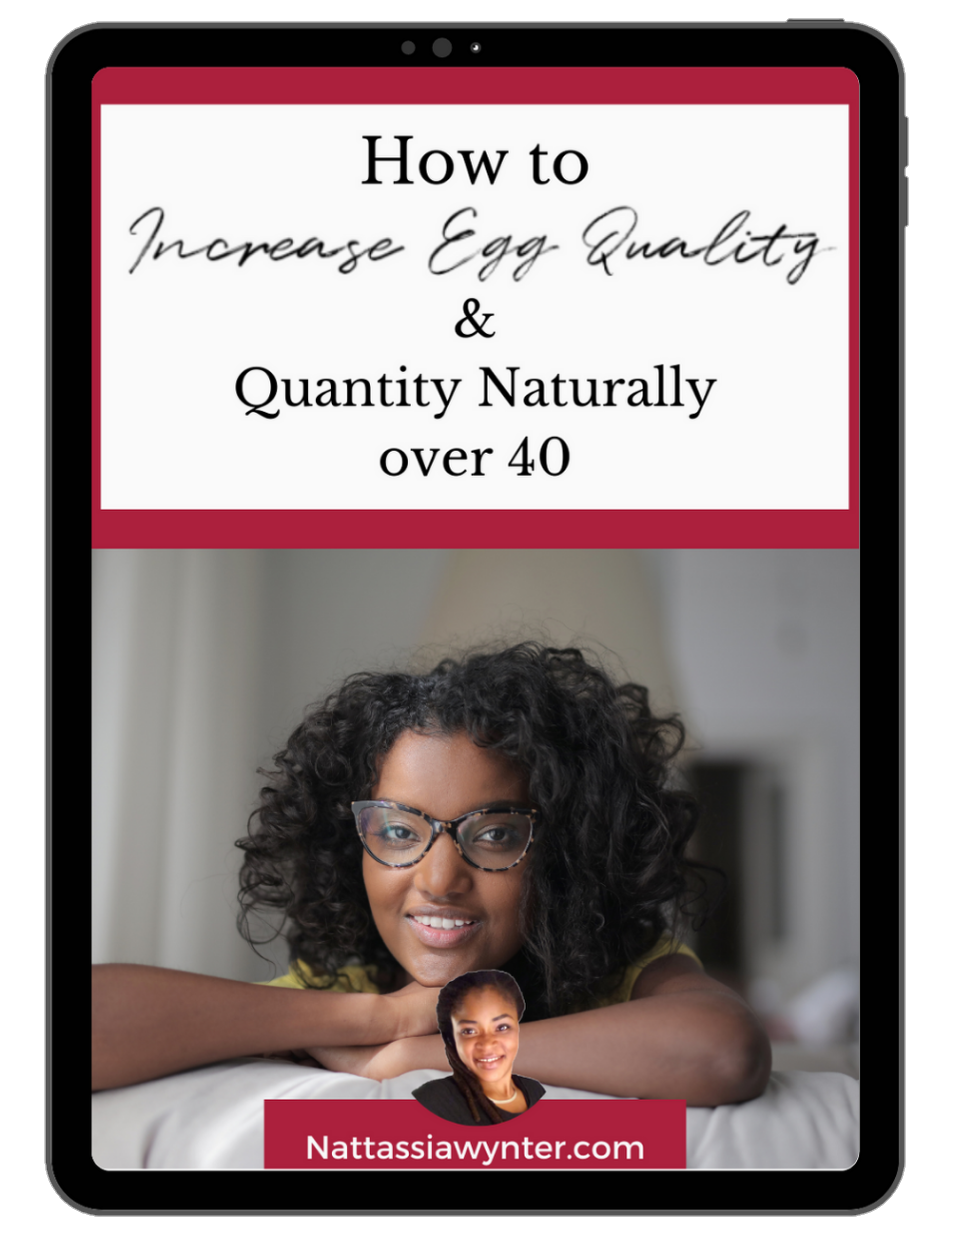 Improve-egg-quality-and-quantity-naturally-over-35